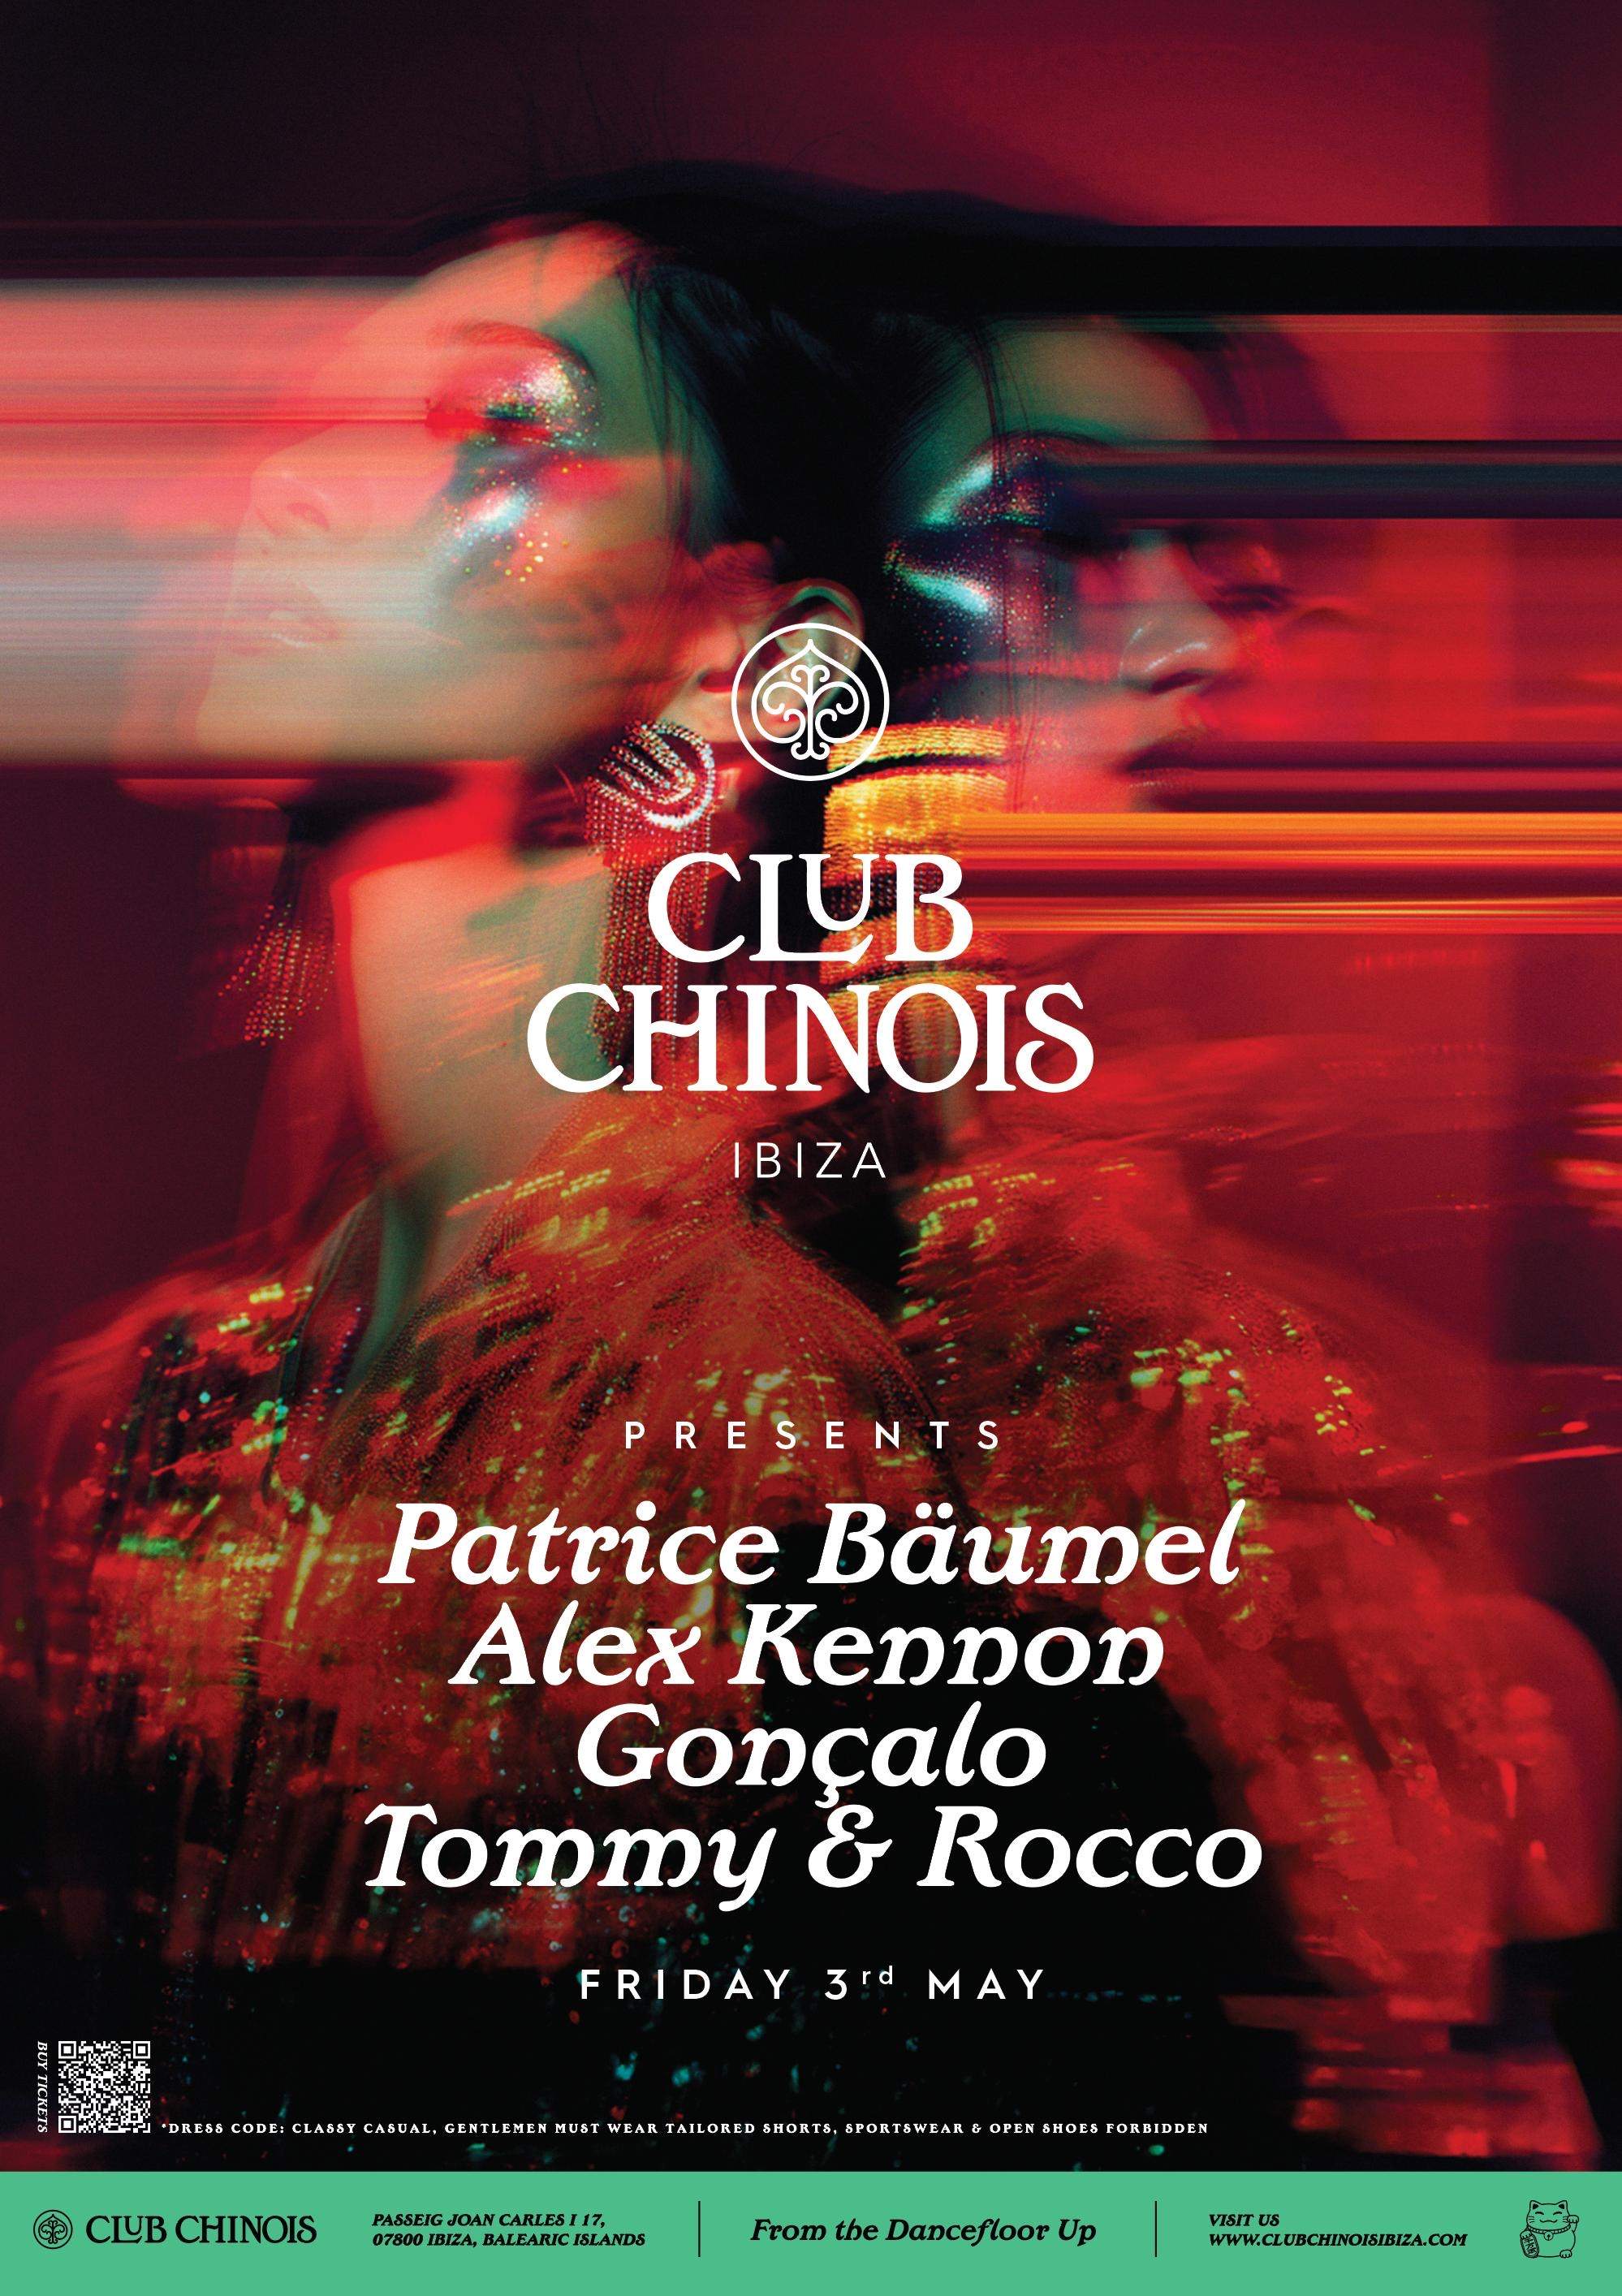 Club Chinois Ibiza presents Patrice Baumel, Alex Kennon, Gonçalo, Tommy & Rocco - Página frontal